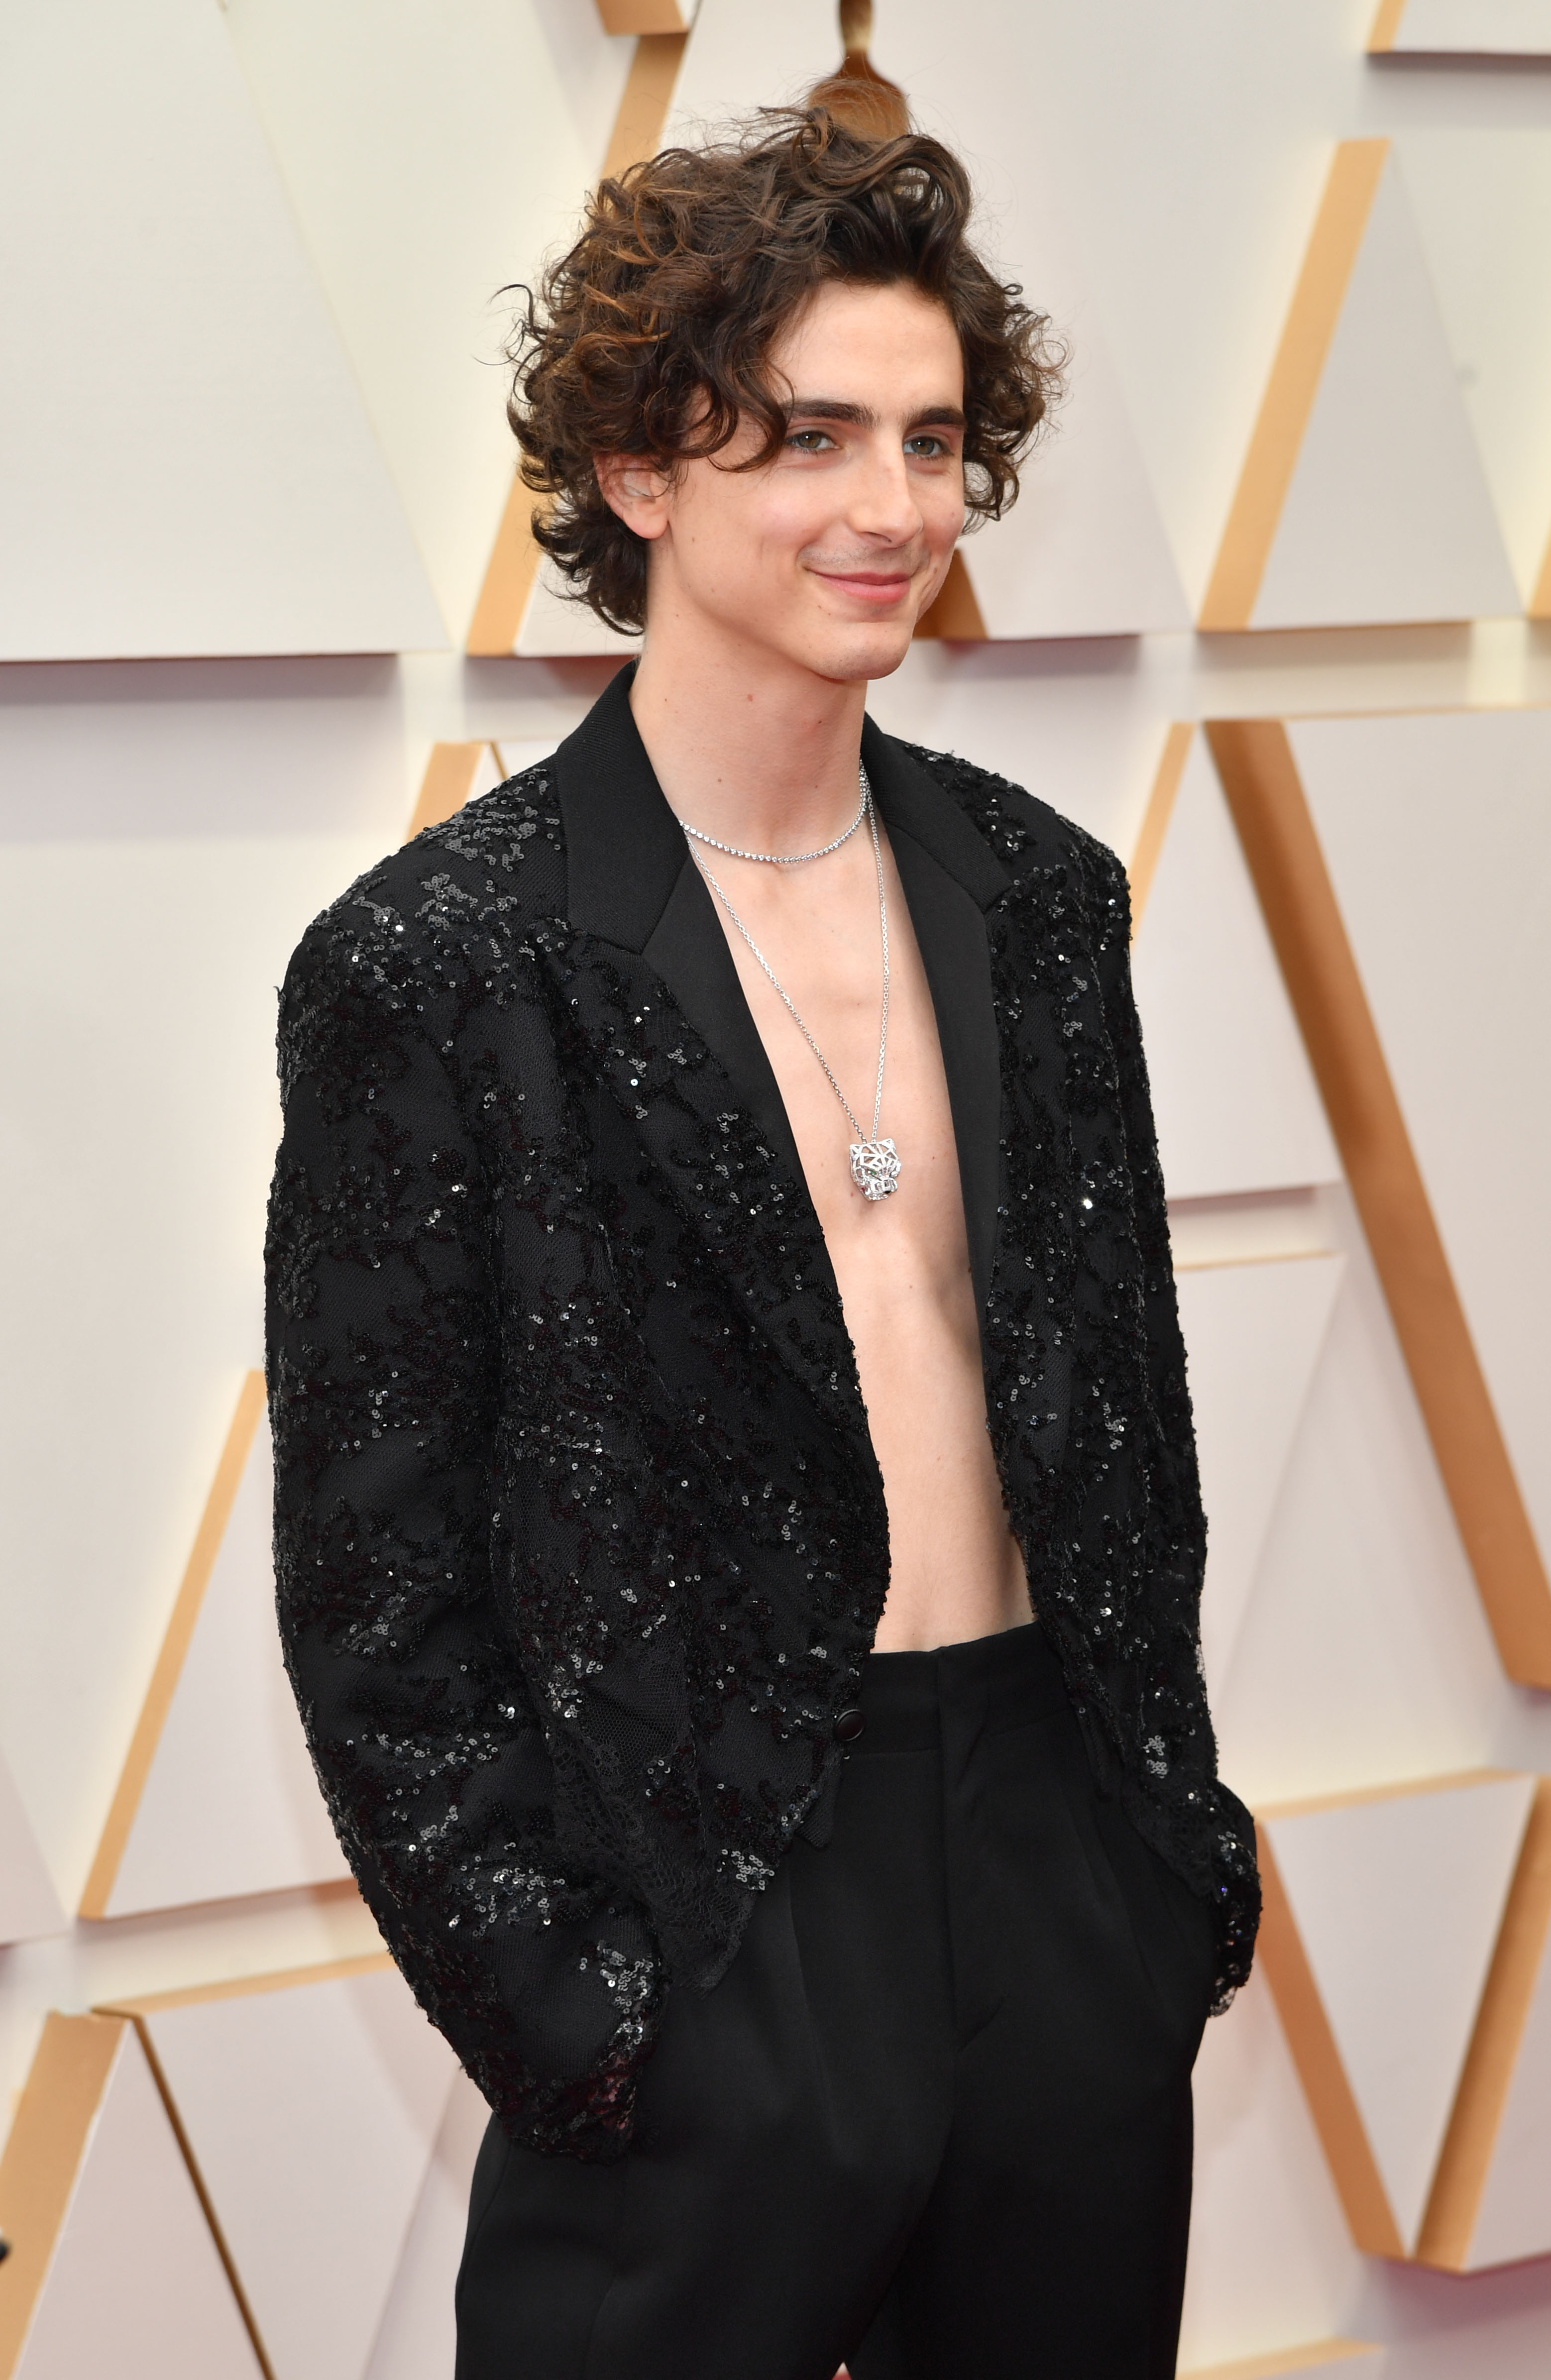 Timothee Chalamet Shirtless on Oscars 2022 Red Carpet: Photos | Life ...